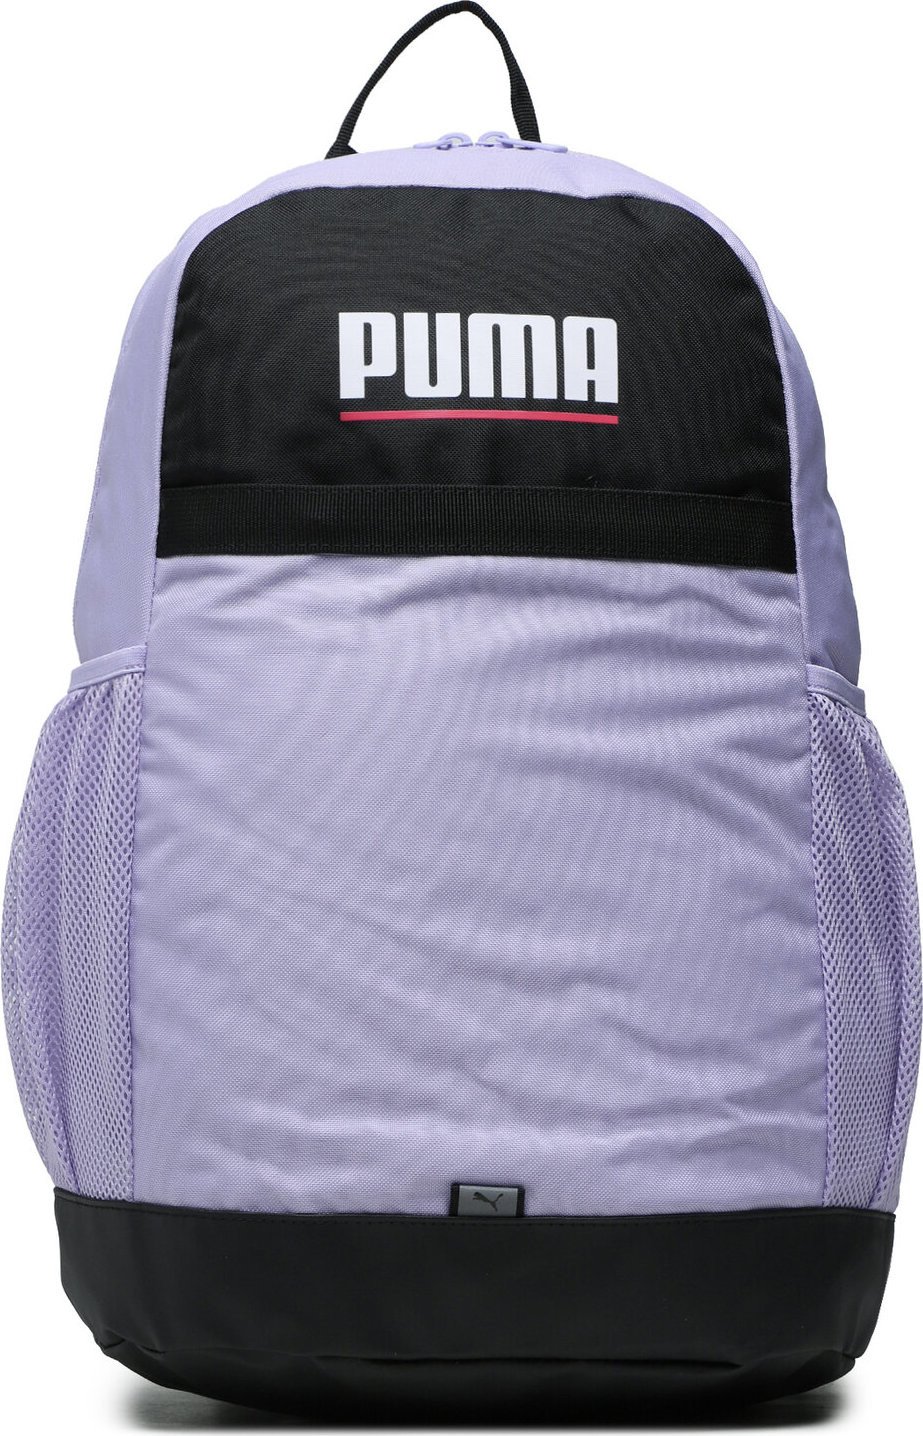 Batoh Puma Plus Backpack 079615 03 Vivid Violet